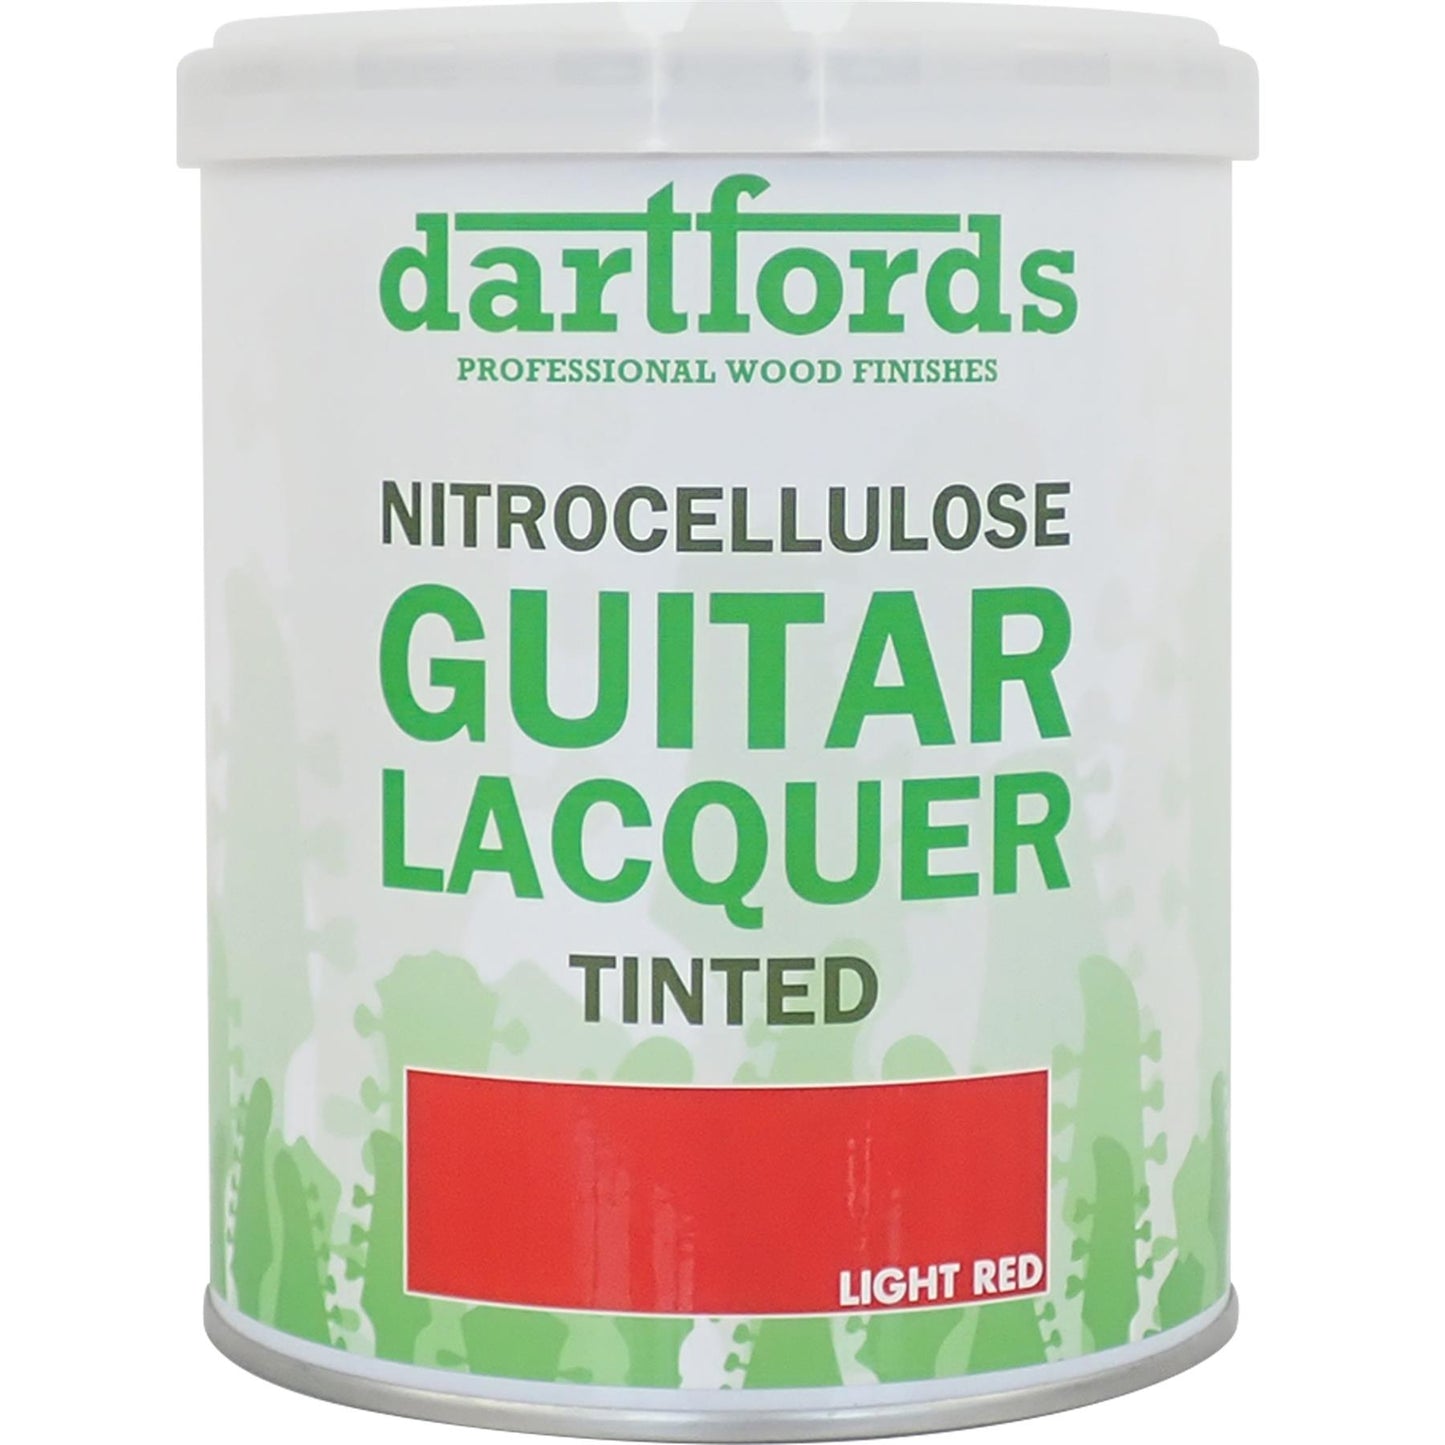 dartfords Light Red Nitrocellulose Guitar Lacquer - 1 litre Tin